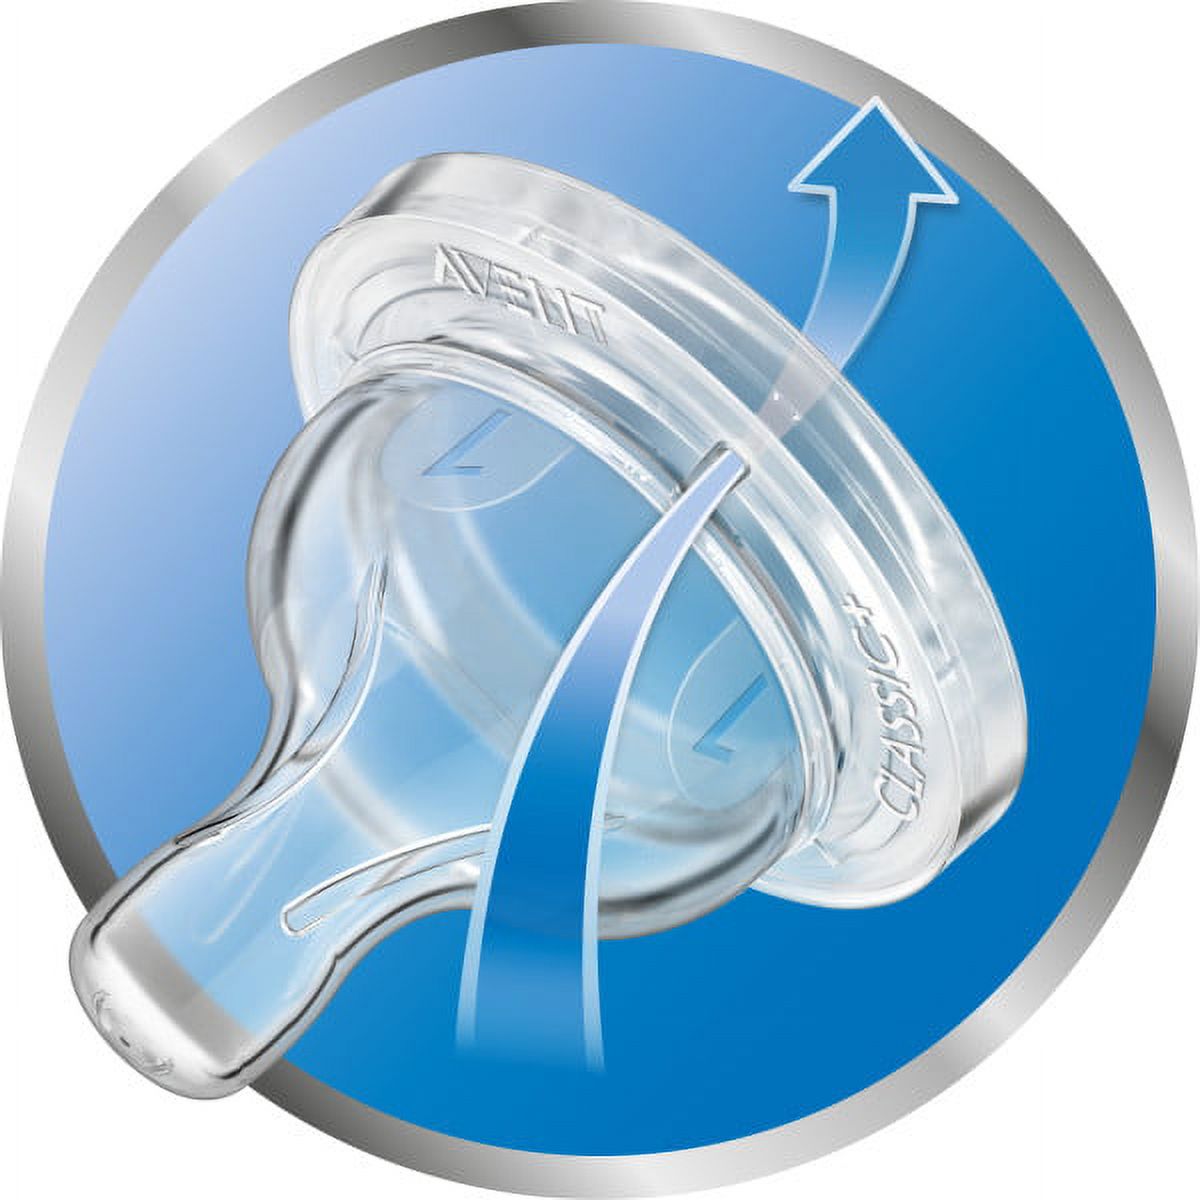 Philips Avent Anti-colic bottle BPA Free Baby Bottle Starter Gift Set, Blue, SCD393/03 - image 4 of 14